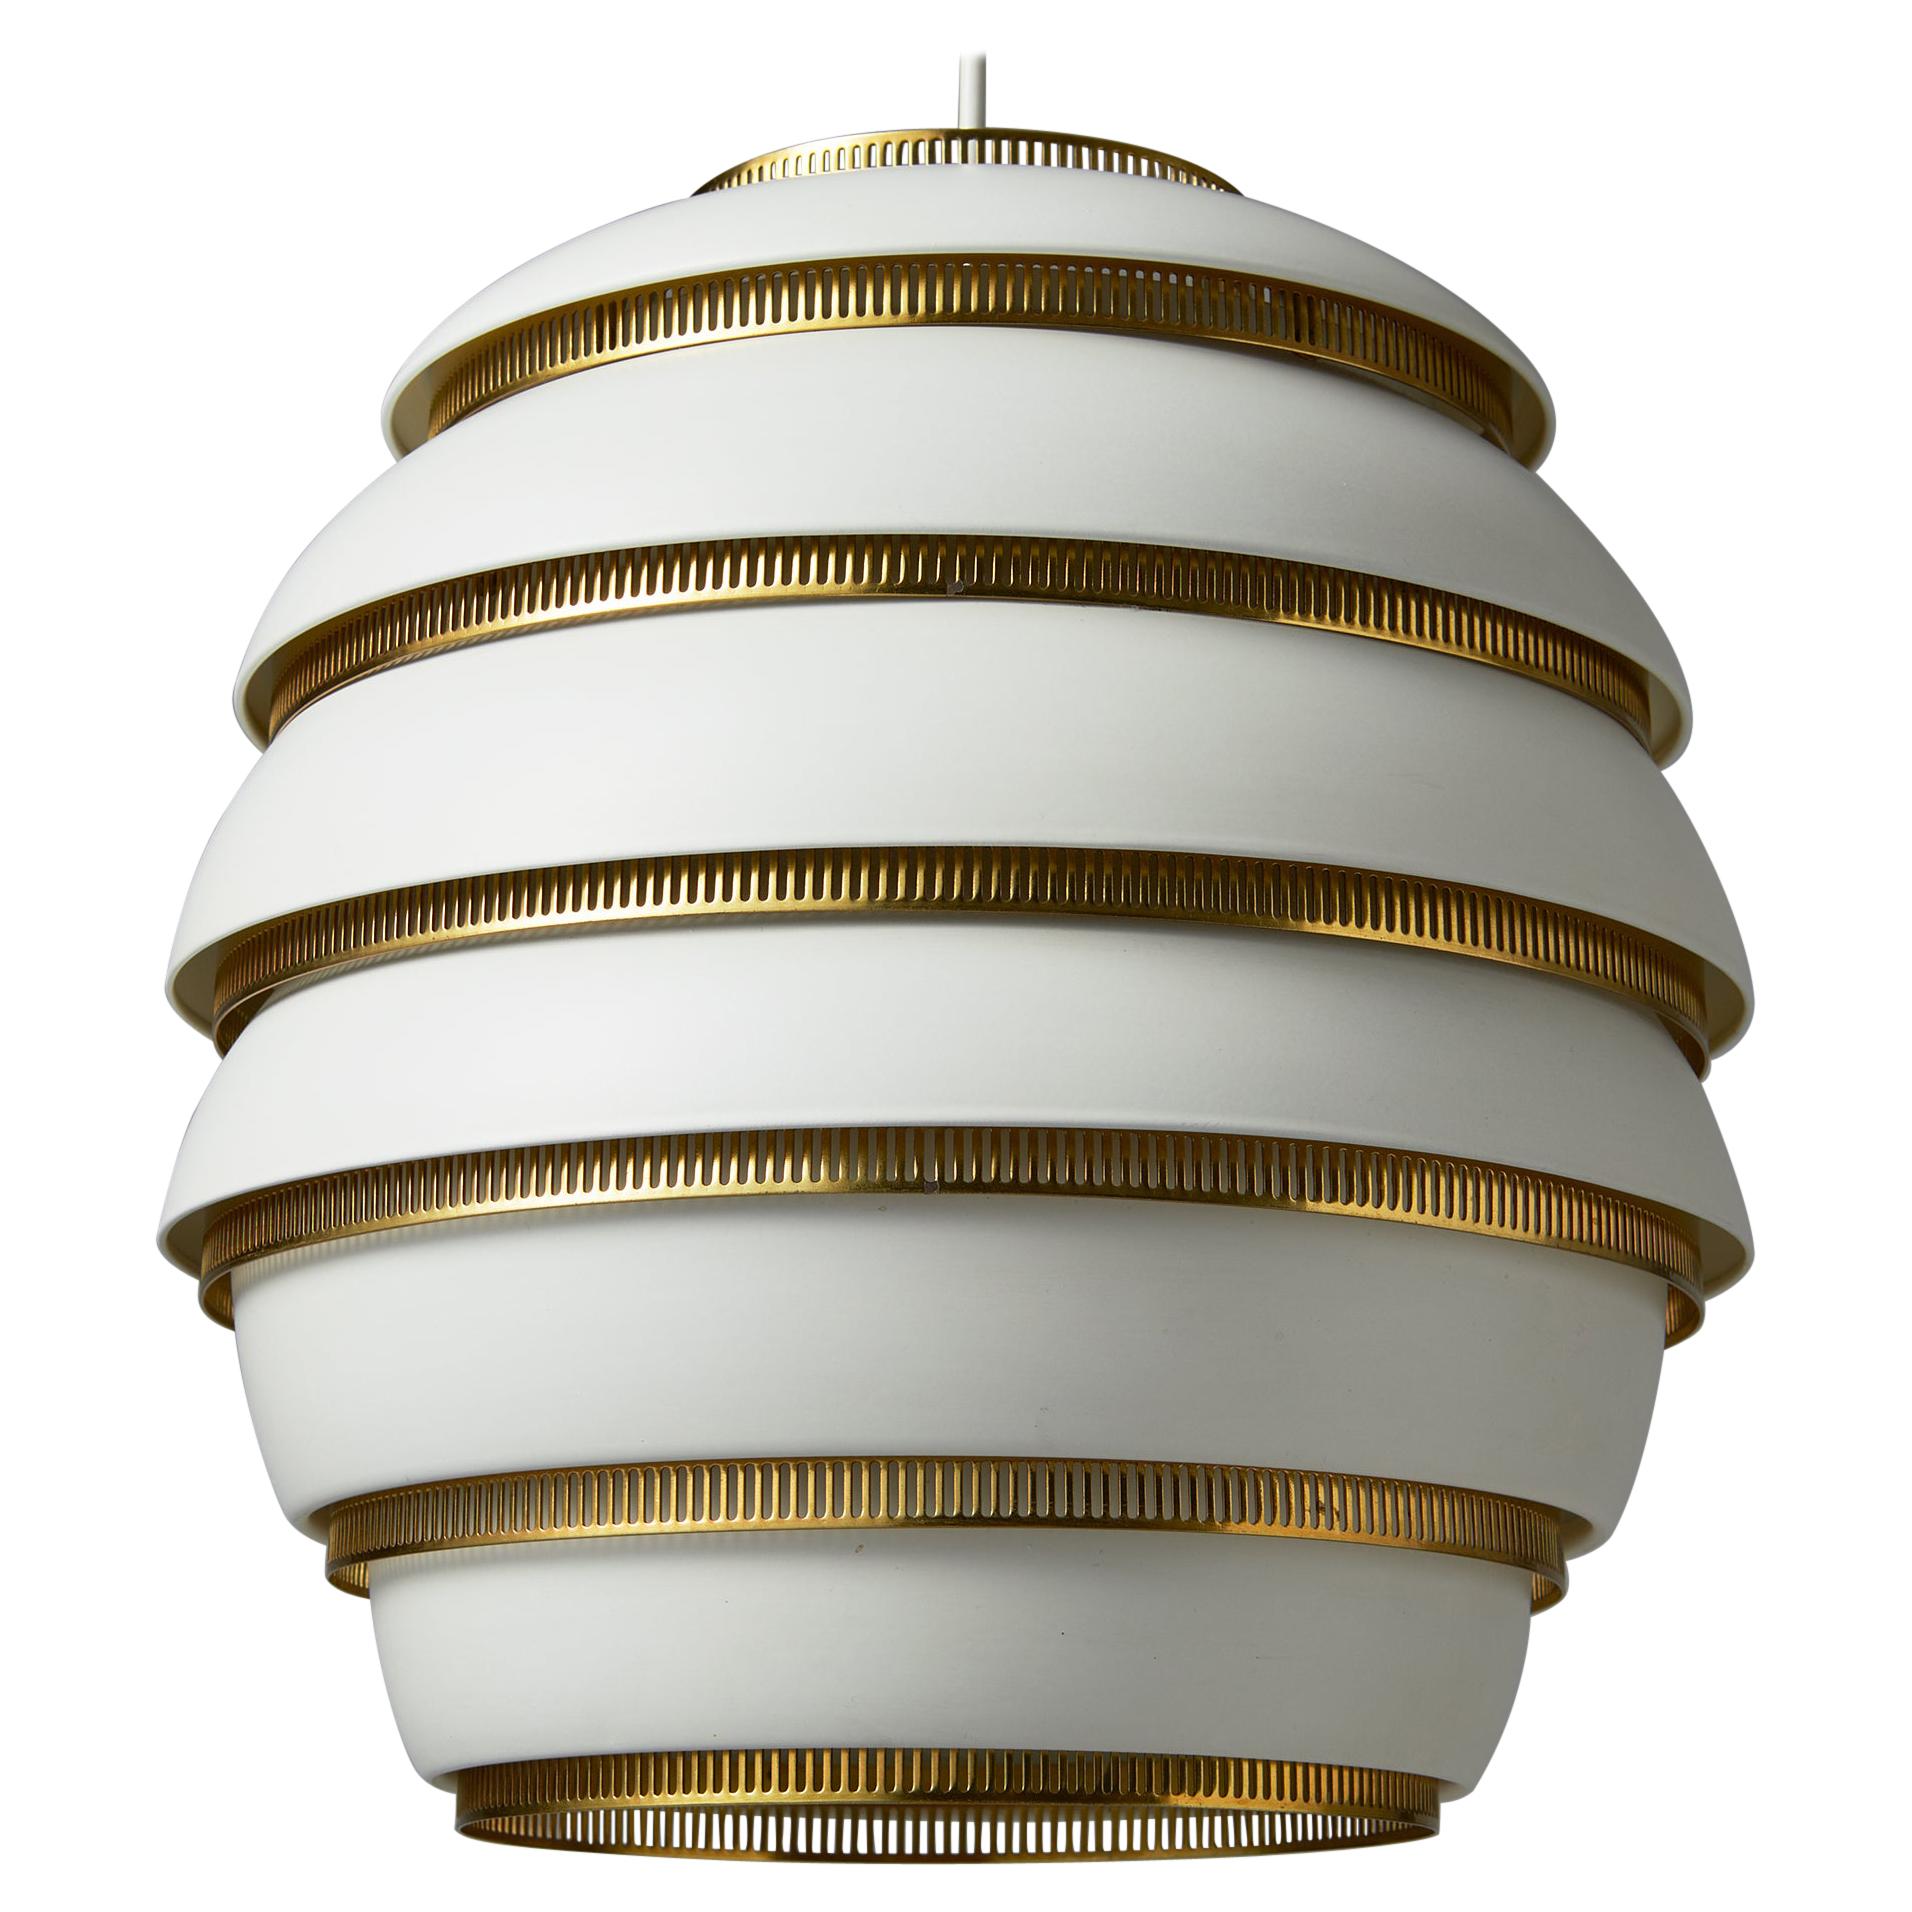 Ceiling Lamp ‘Beehive’ Model A332 Designed by Alvar Aalto for Valaistustyo